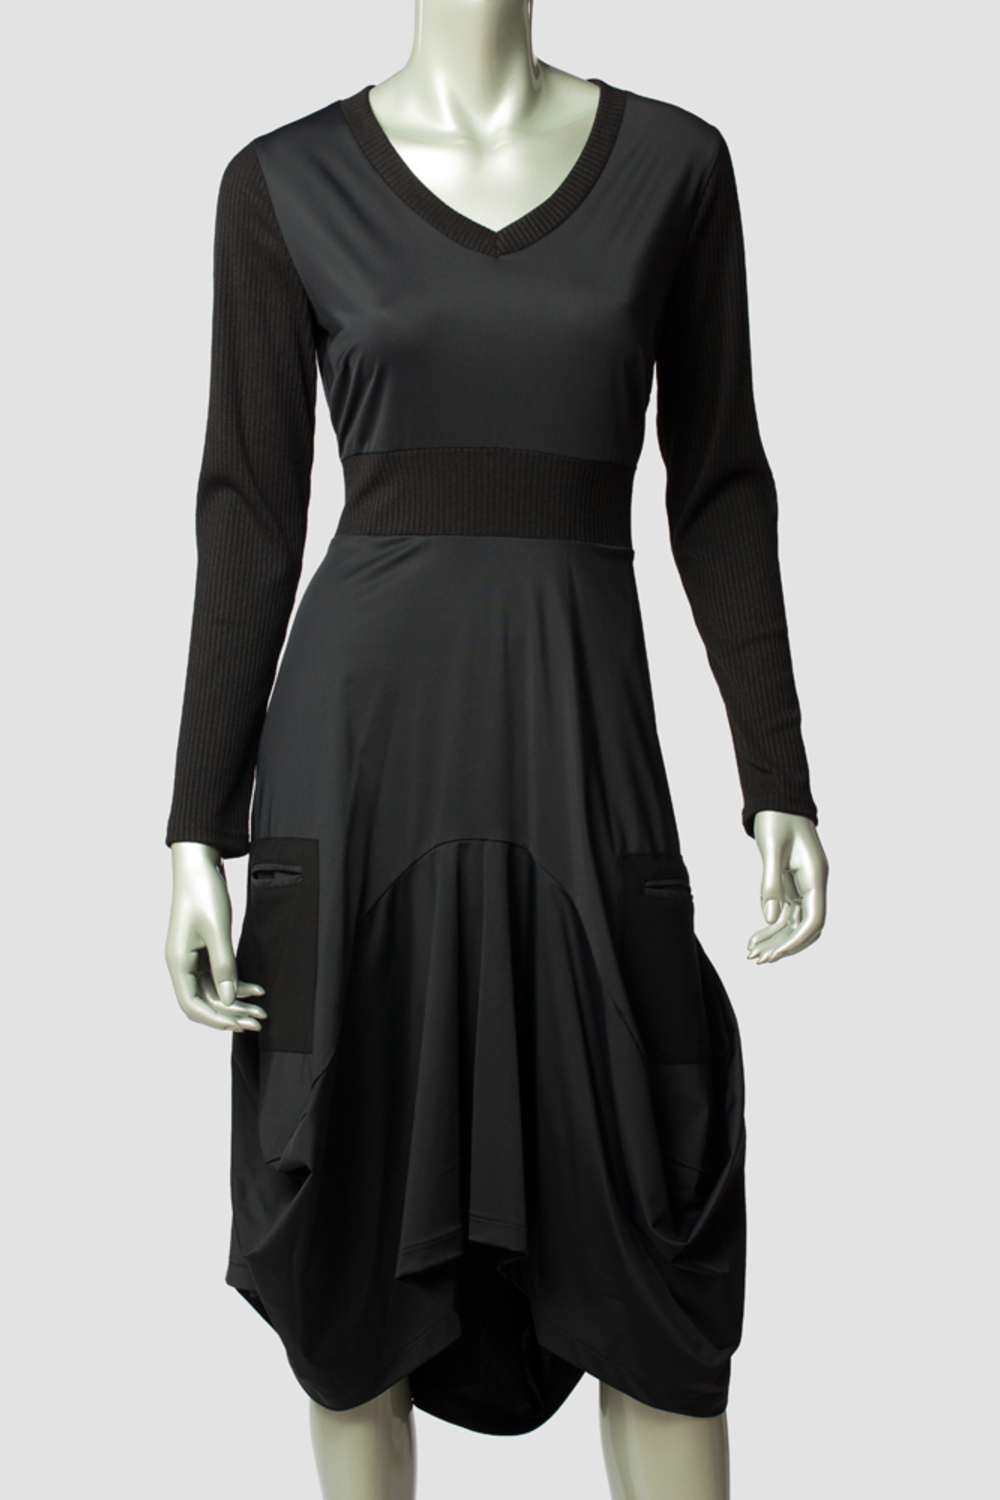 Joseph Ribkoff dress style 144512. Black